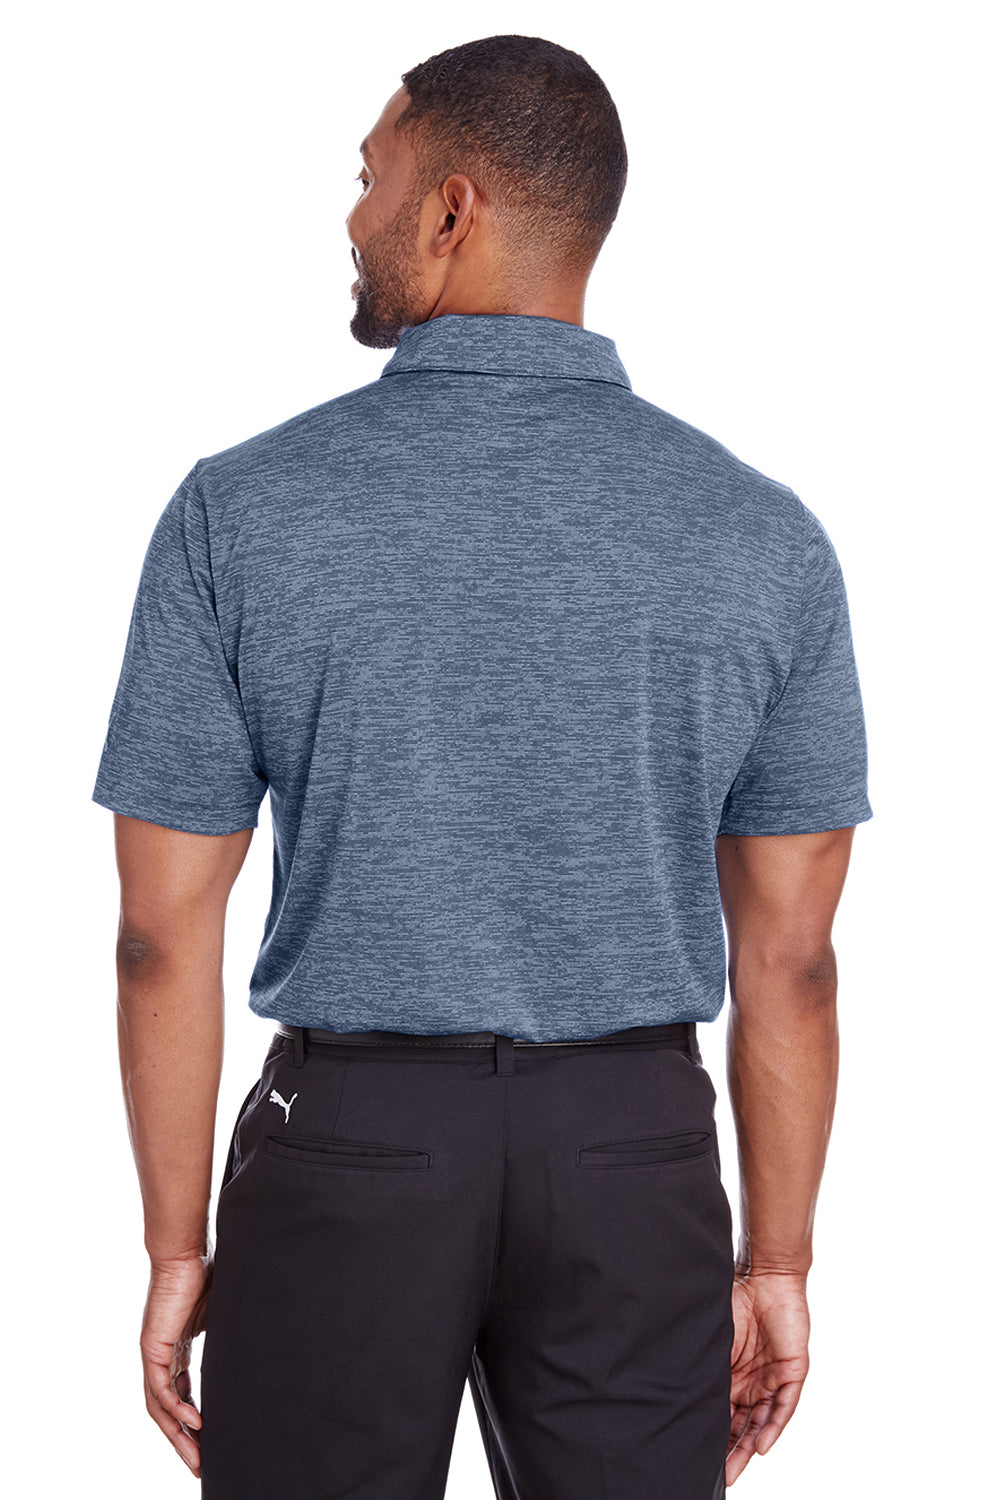 Puma 596801 Mens Icon Performance Moisture Wicking Short Sleeve Polo Shirt Navy Blue Back